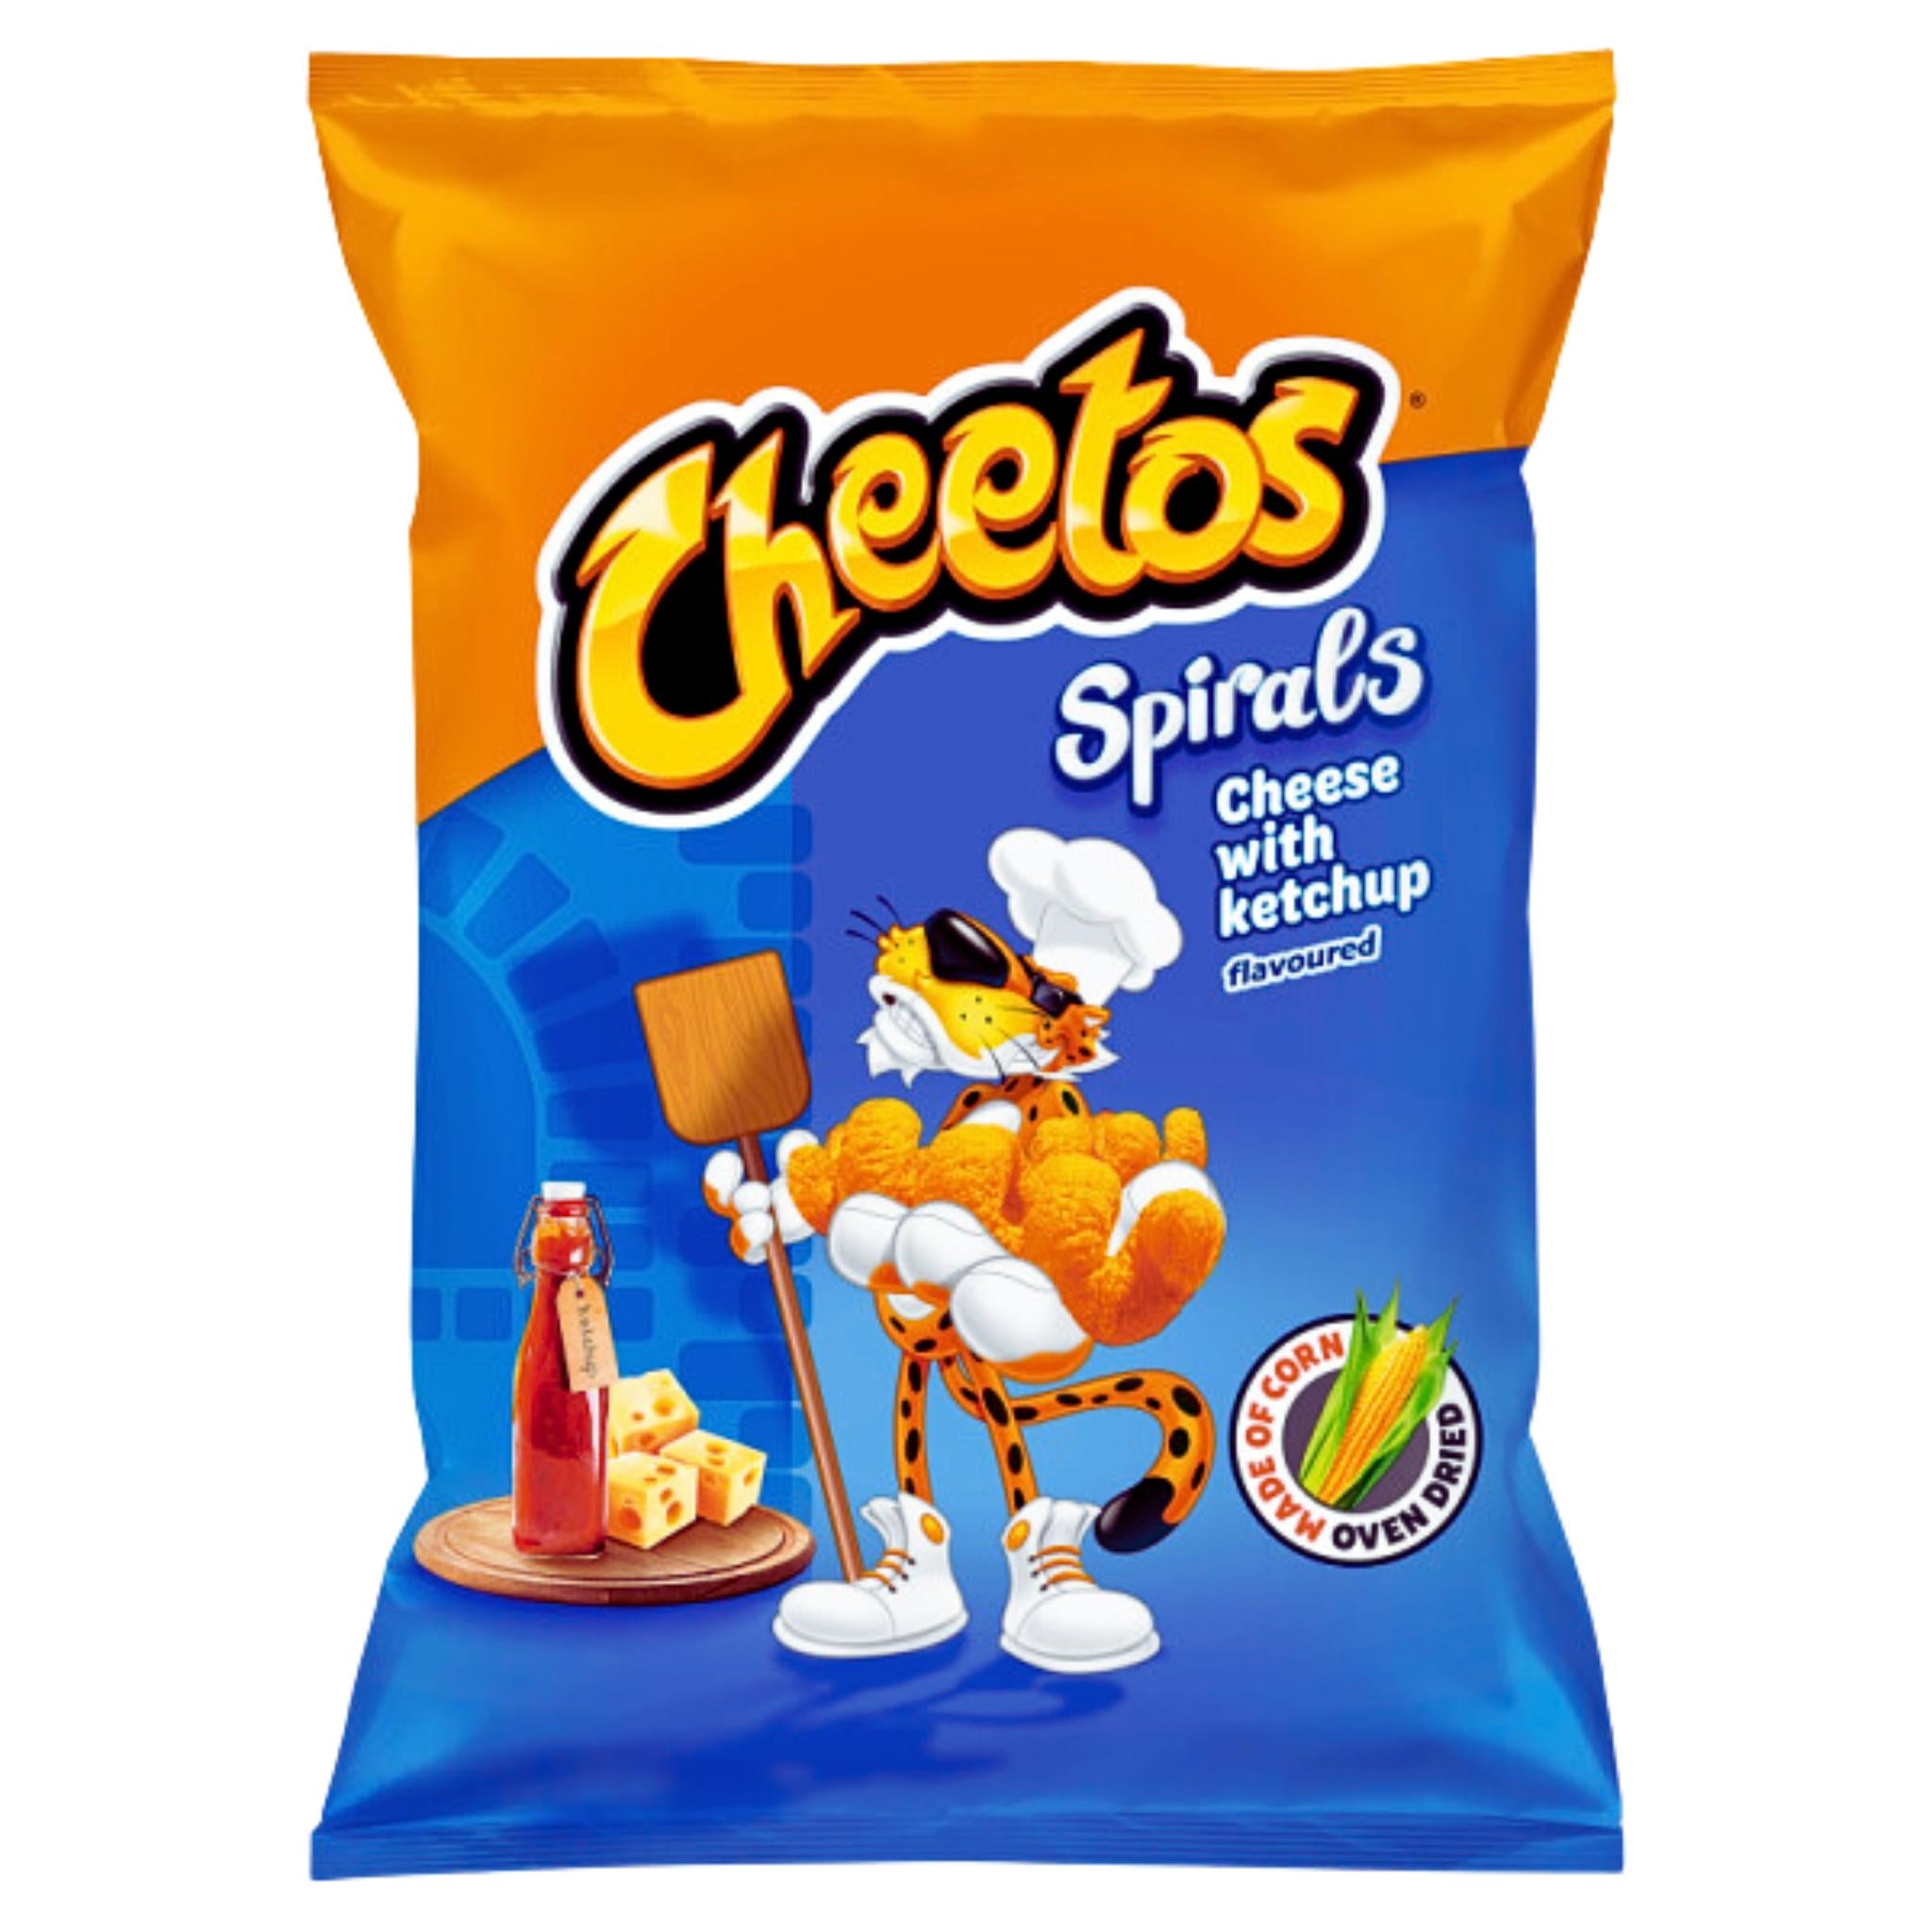 Cheetos Spirals (Cheese With Ketchup) - 80g (POOLS)